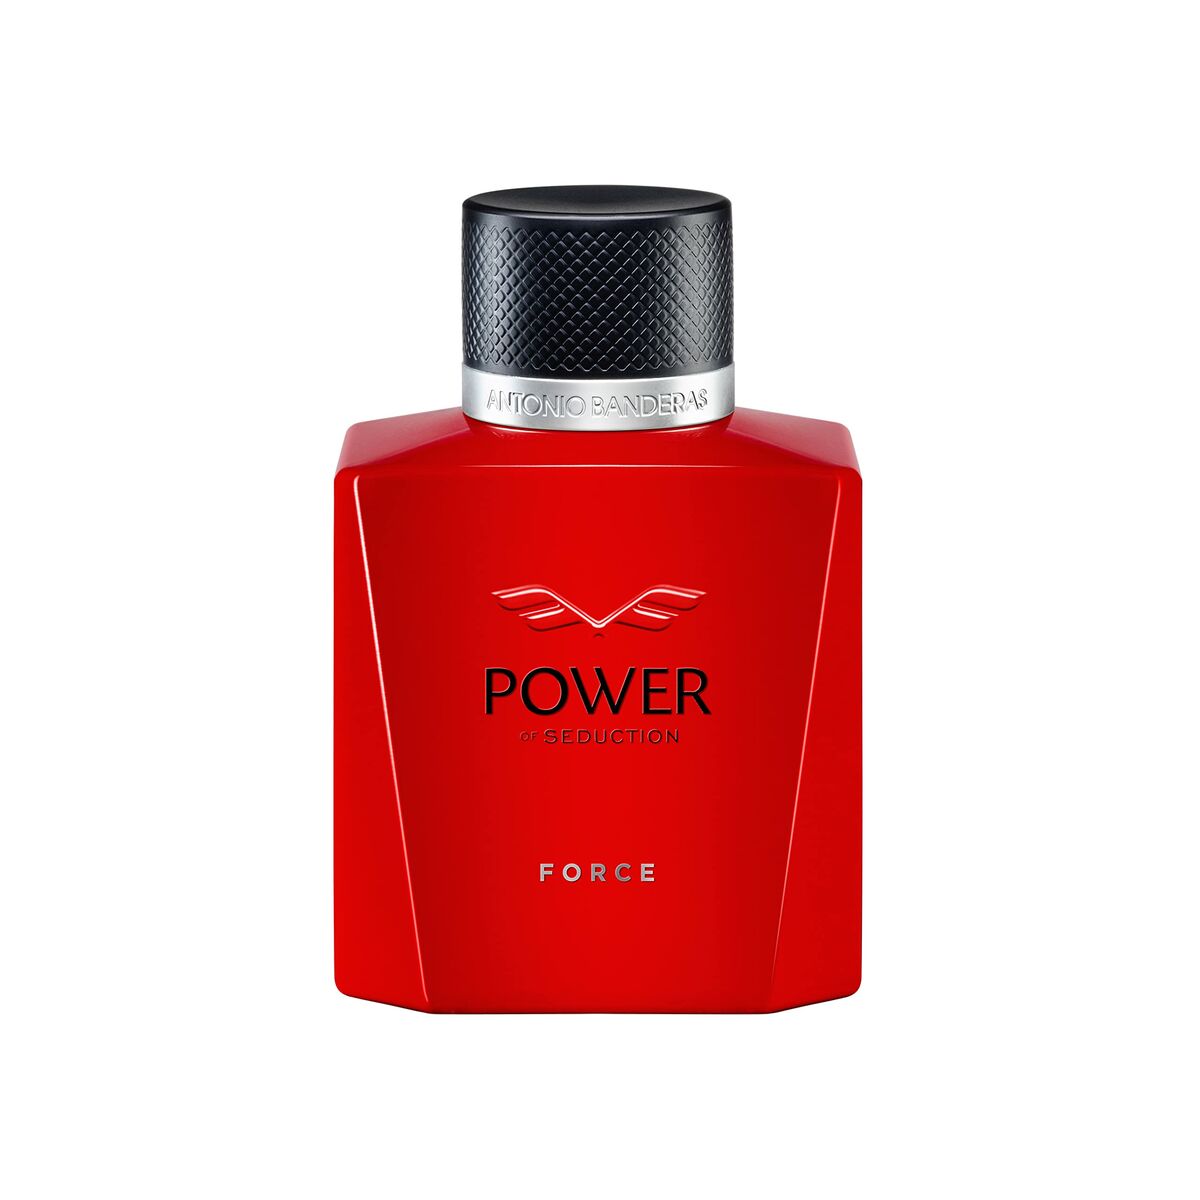 Men's Perfume Antonio Banderas Power of Seduction Force EDT